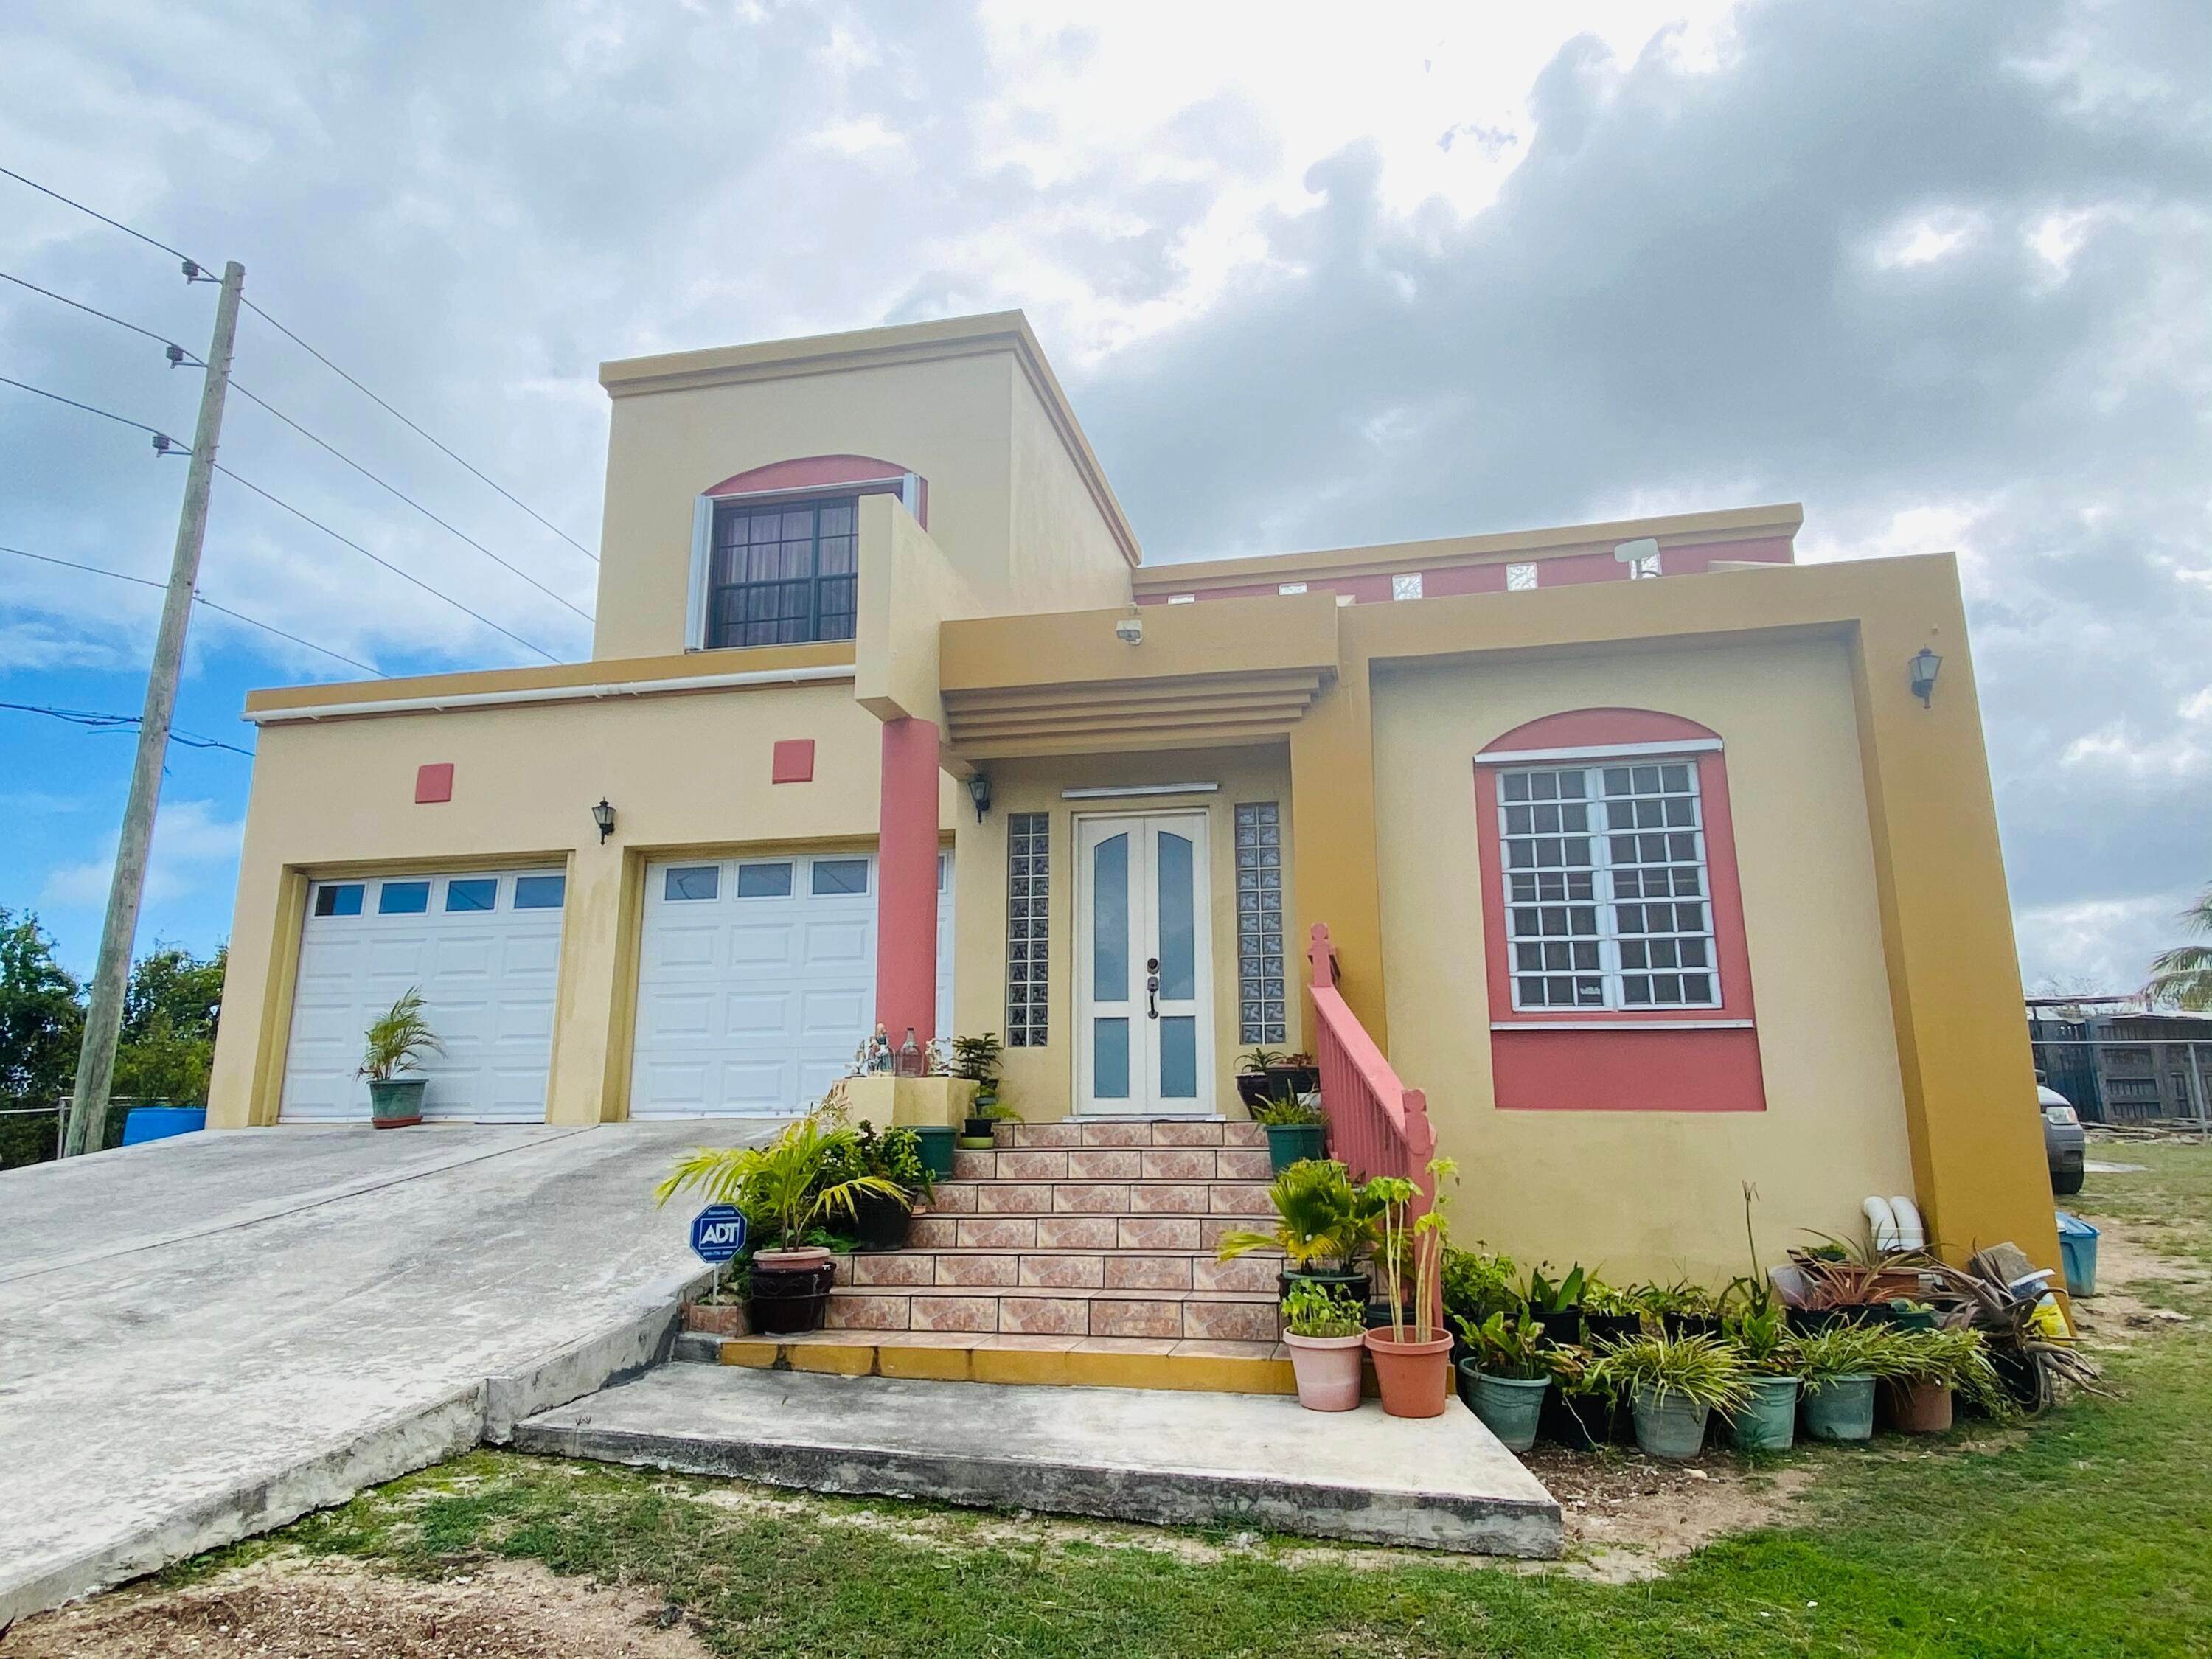 Single Family Homes for Sale at 459 Barren Spot KI St Croix, Virgin Islands 00820 United States Virgin Islands